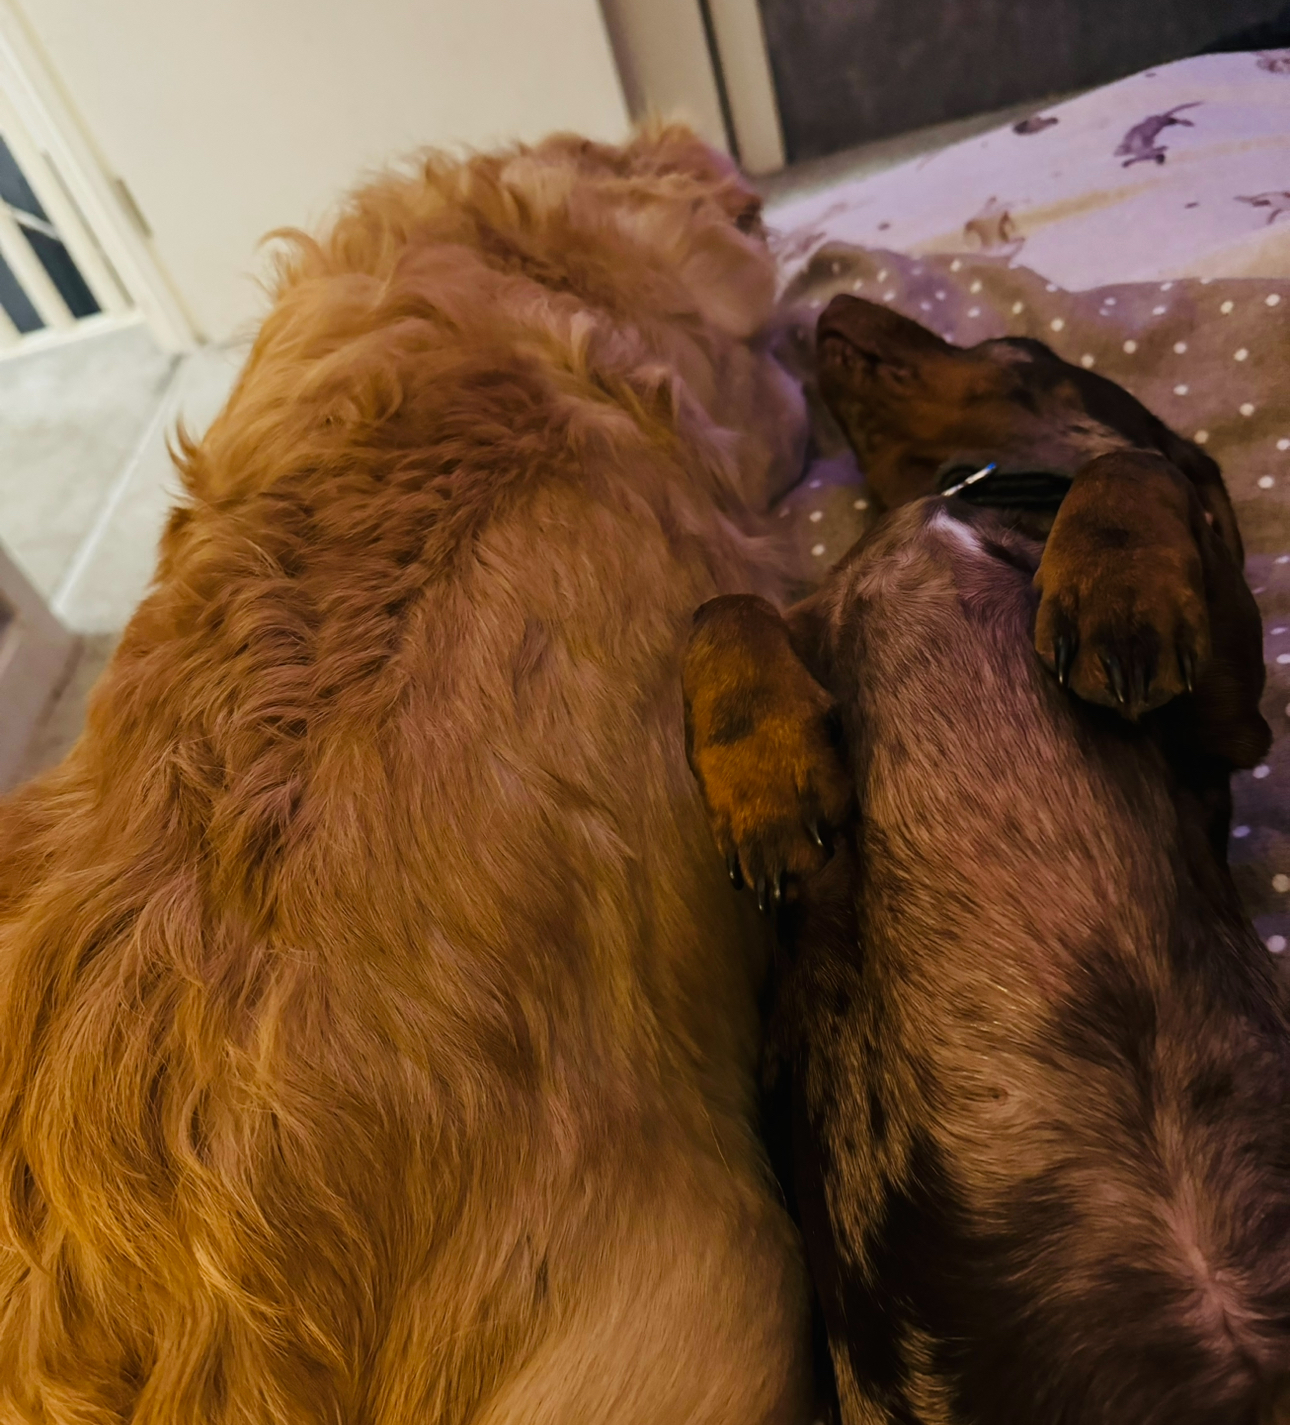 dogs cuddling up